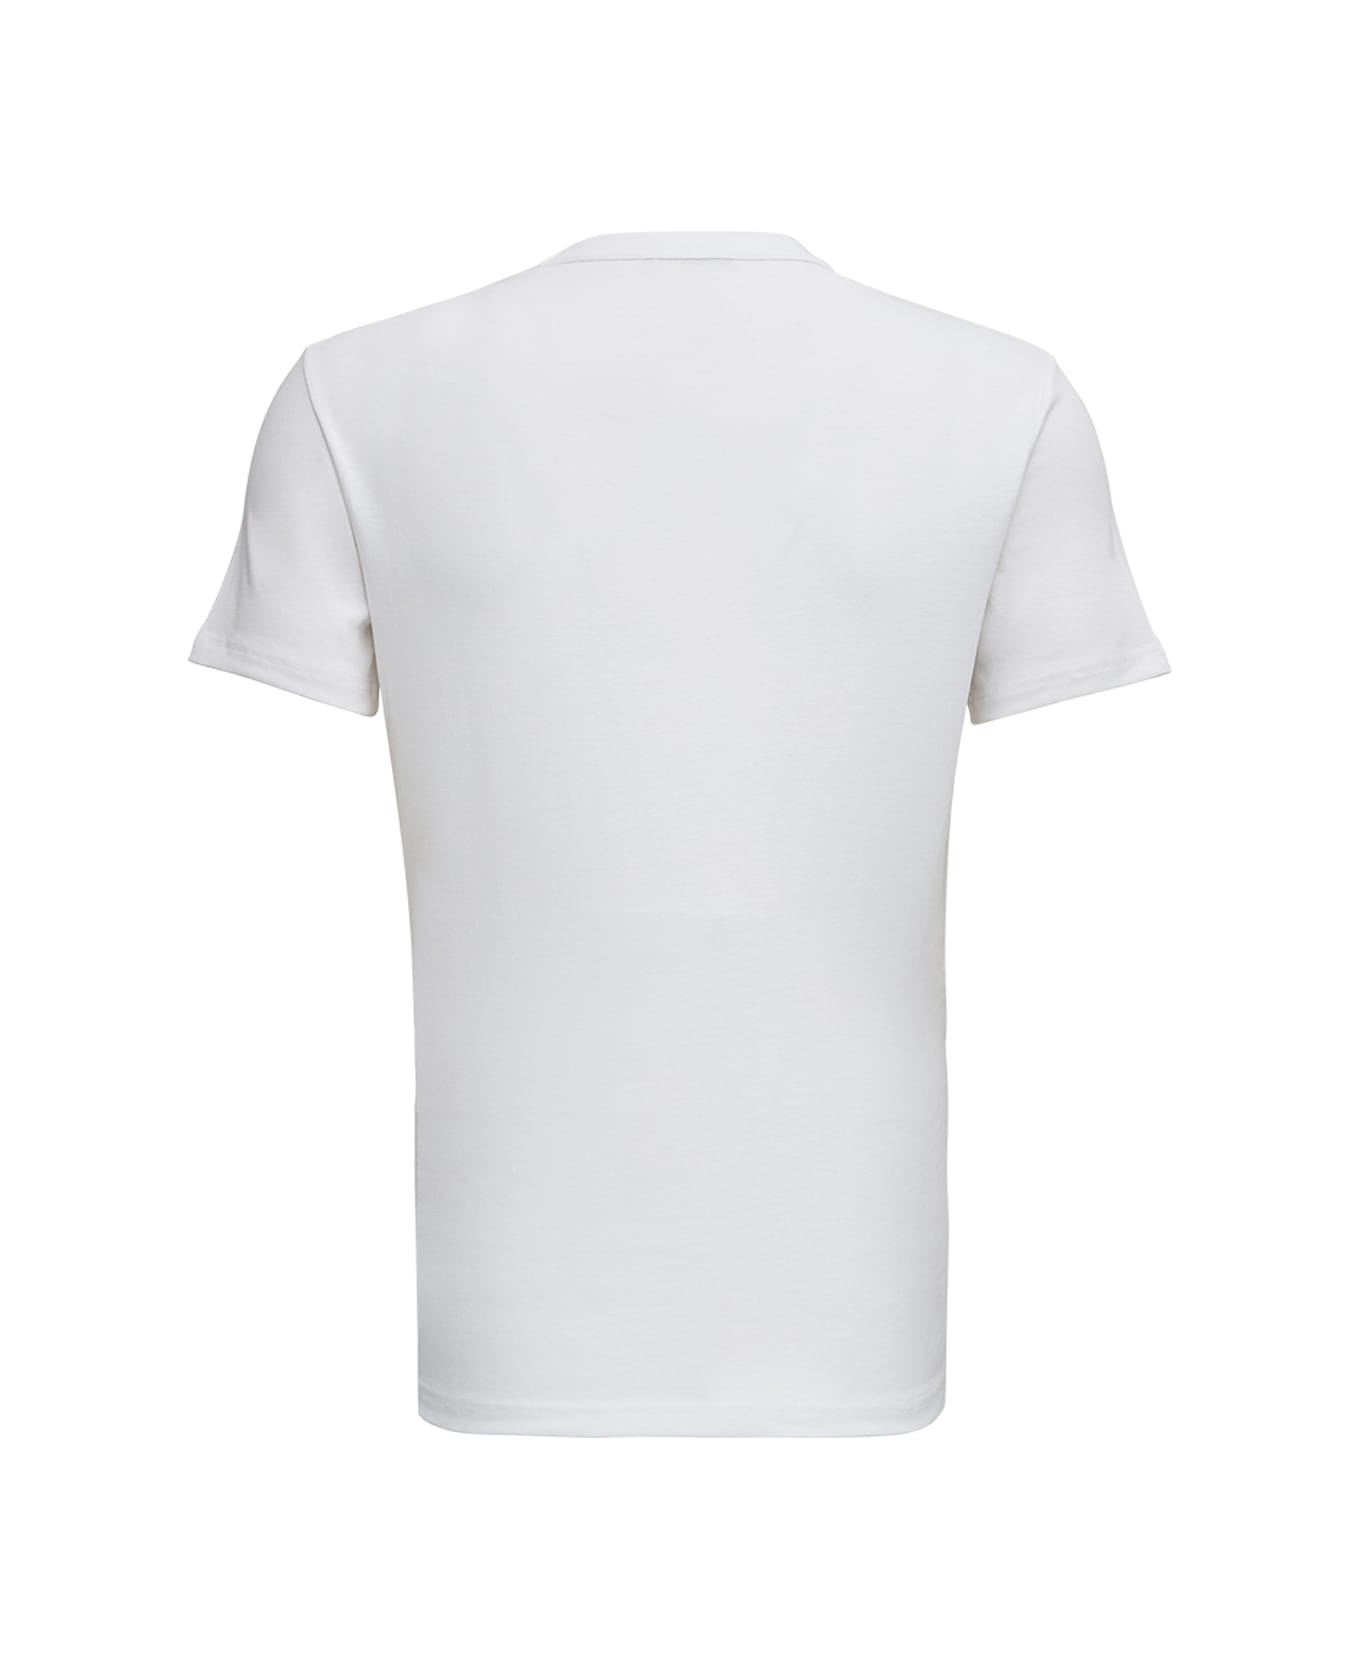 Tom Ford White Cotton Crew Neck T-shirt Man Tom Ford - White